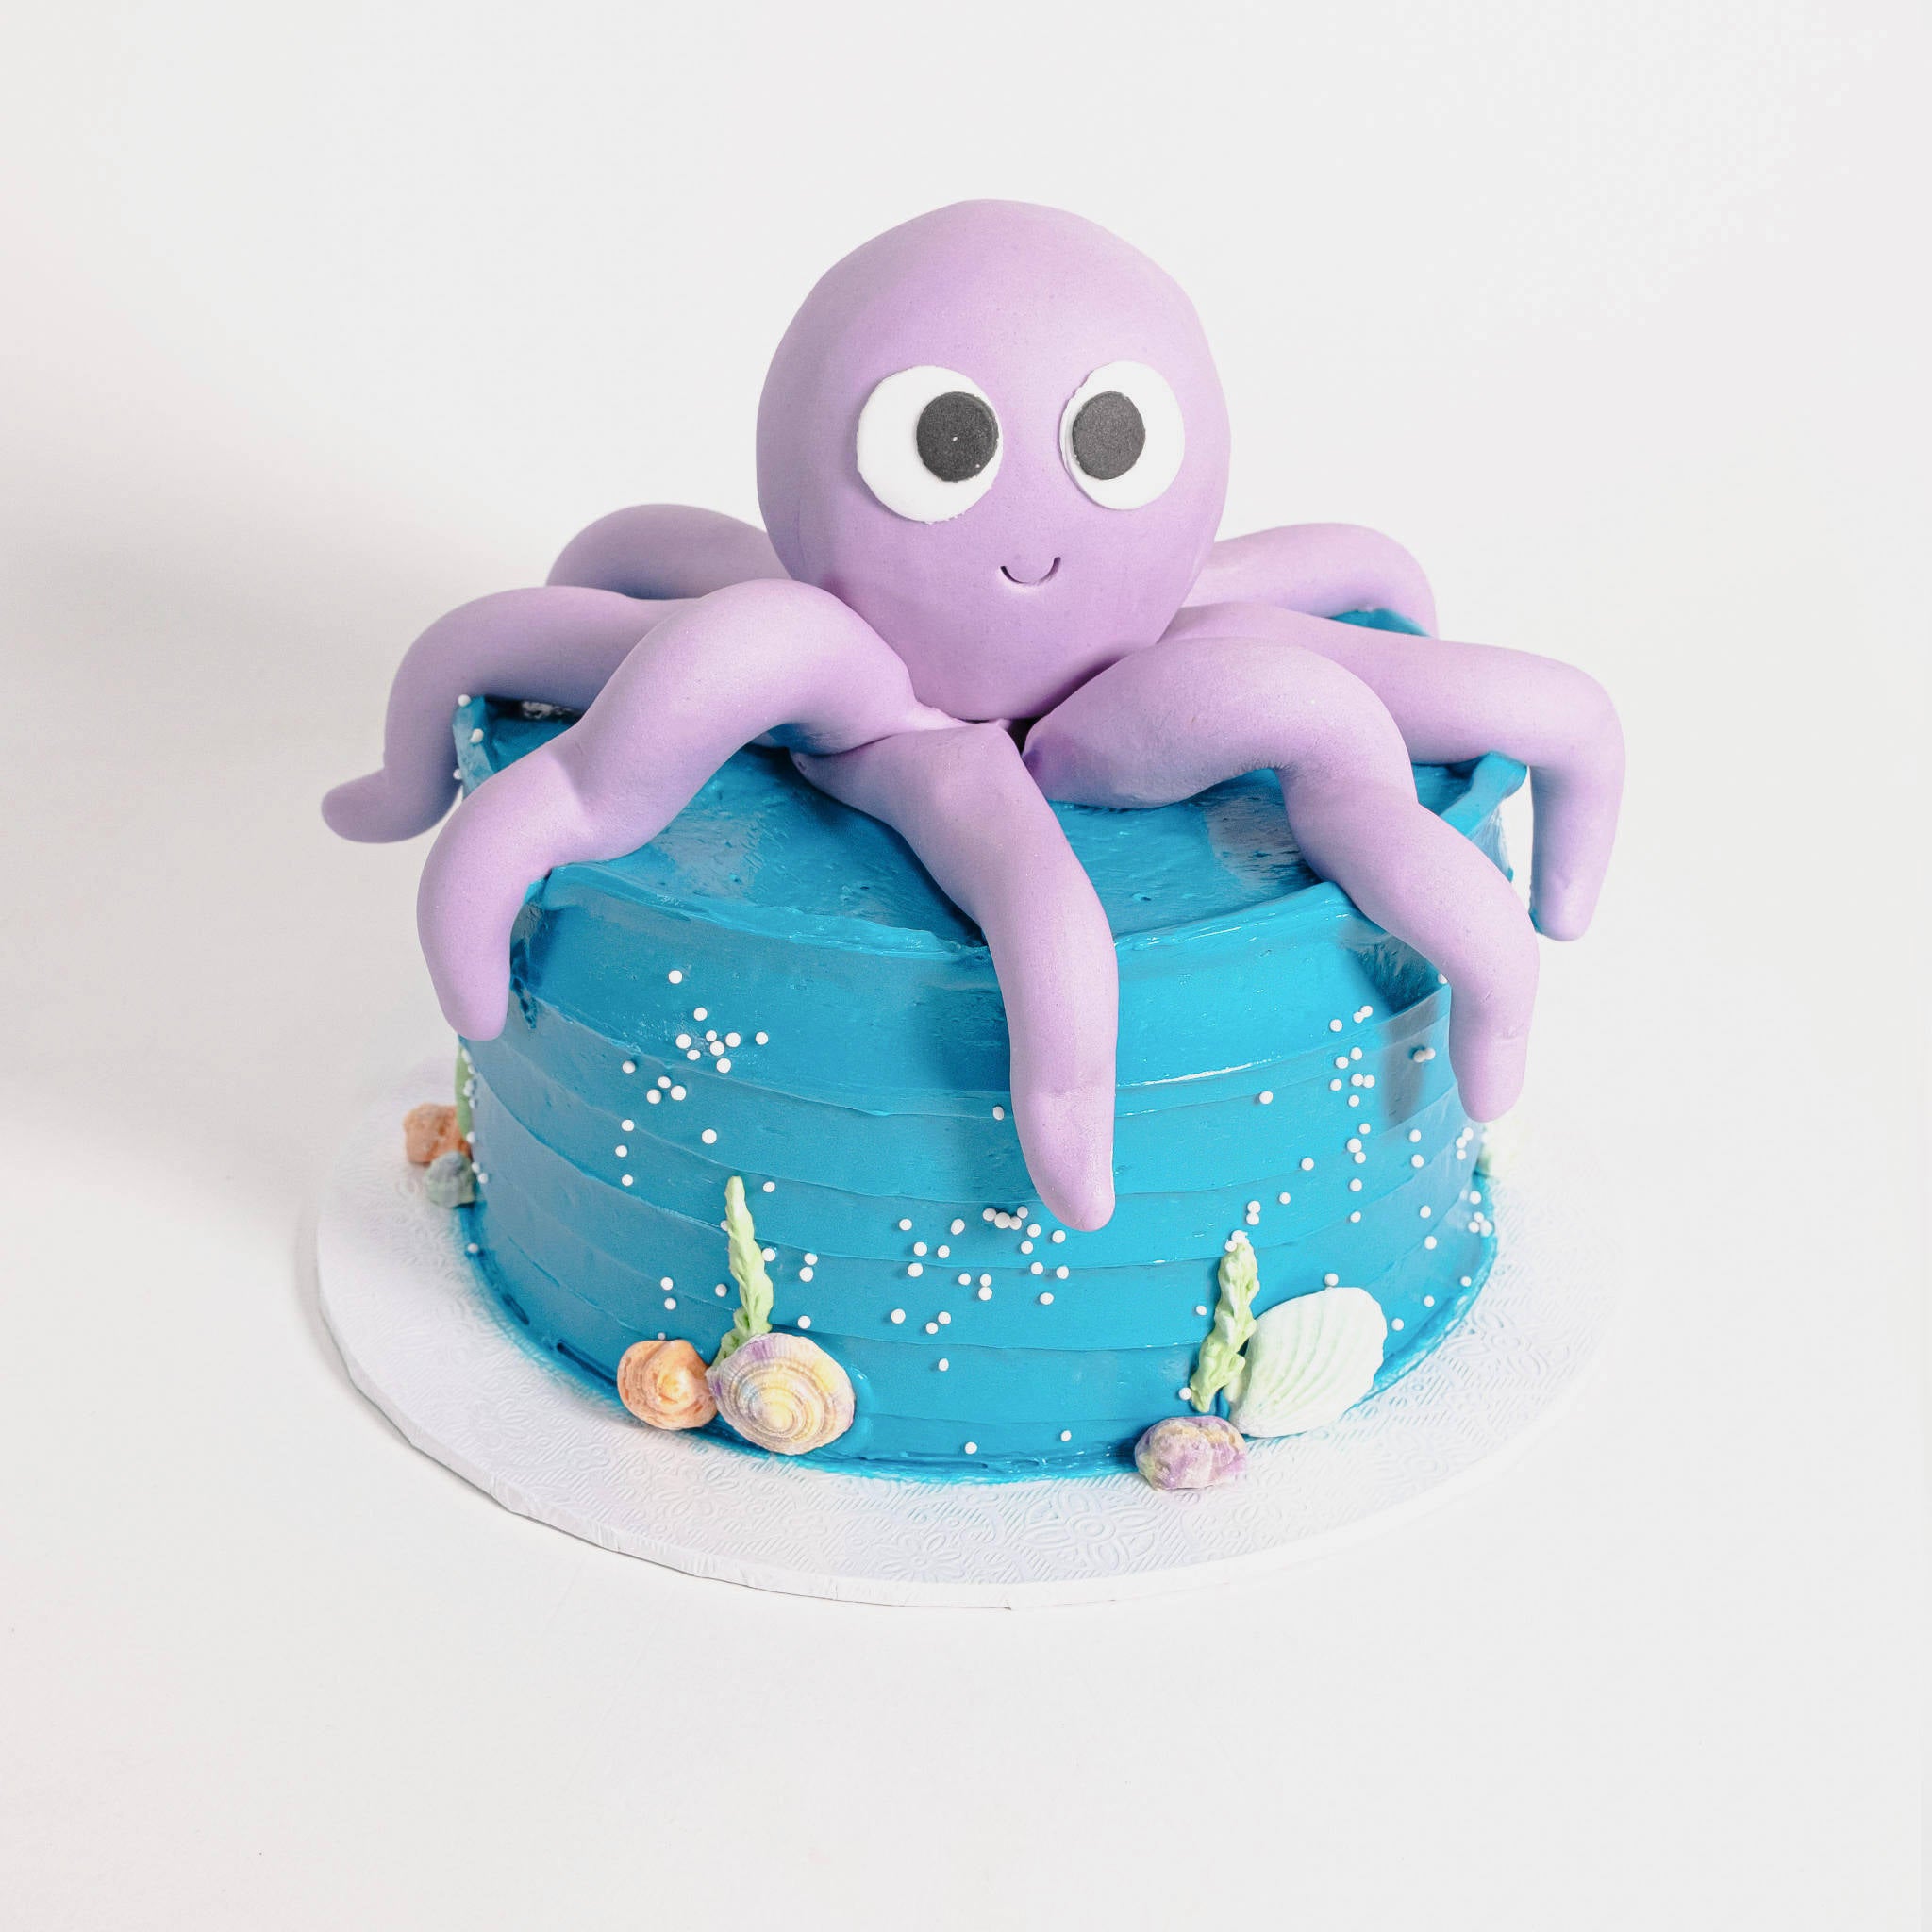 Under the sea wedding cake | Ocean cakes, Sea cakes, Themed cakes